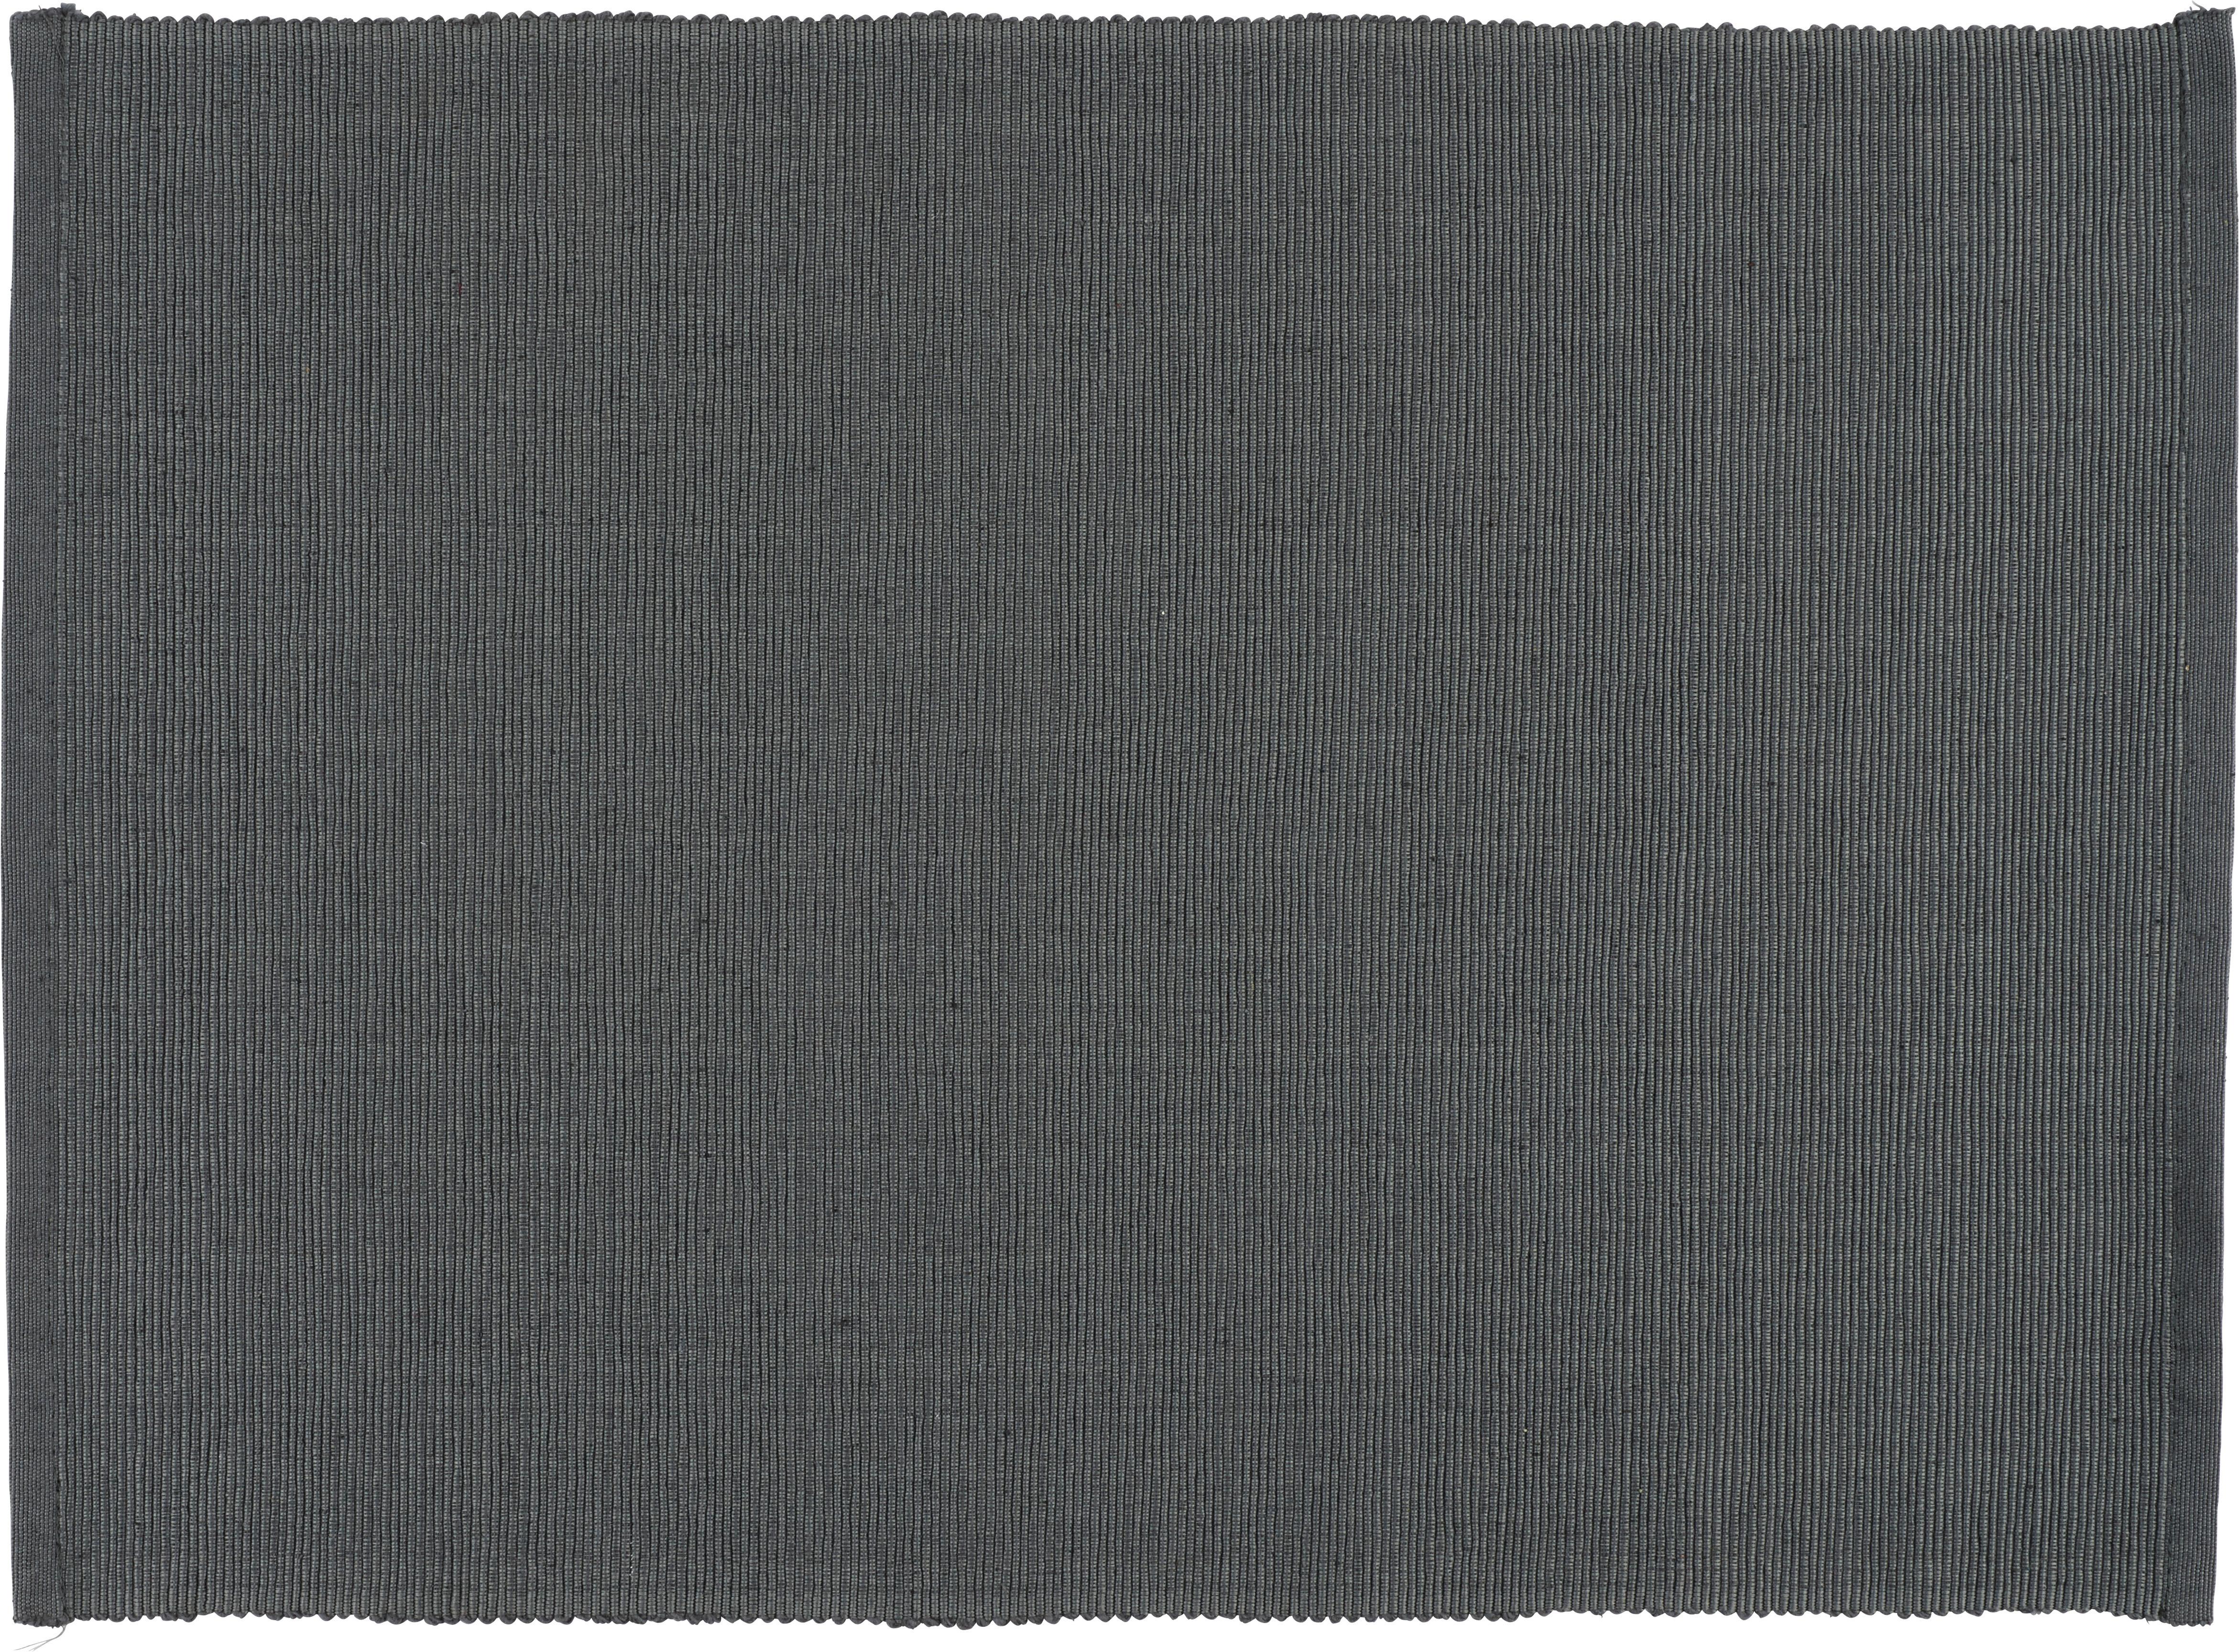 Prestieranie Maren, 33/45cm, Antracitová - antracitová, textil (33/45cm) - Based